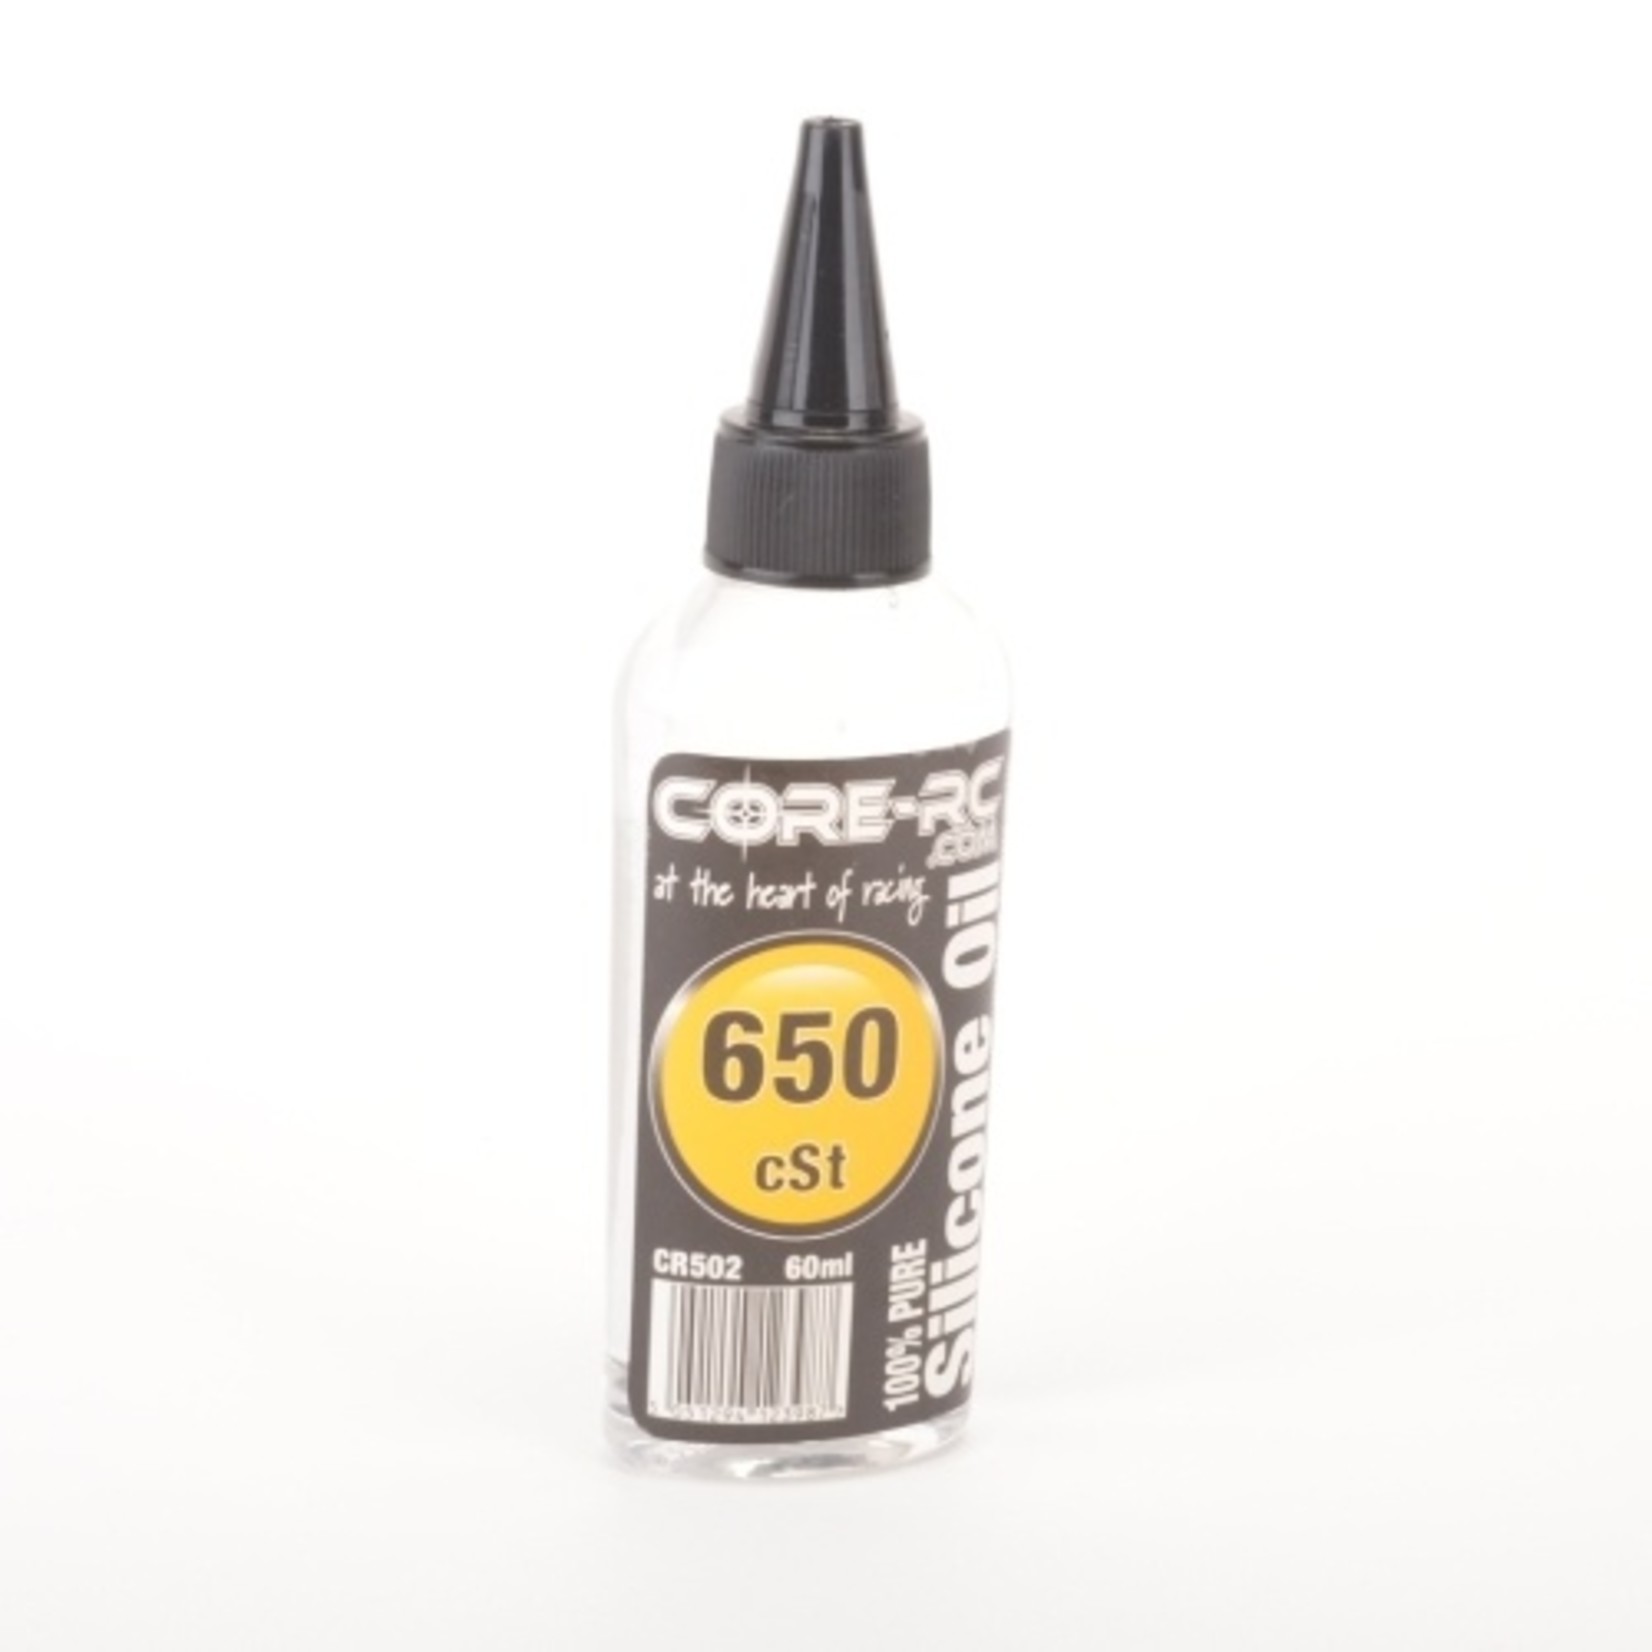 Core RC CORE RC Silicone Oil - 650cSt - 60ml